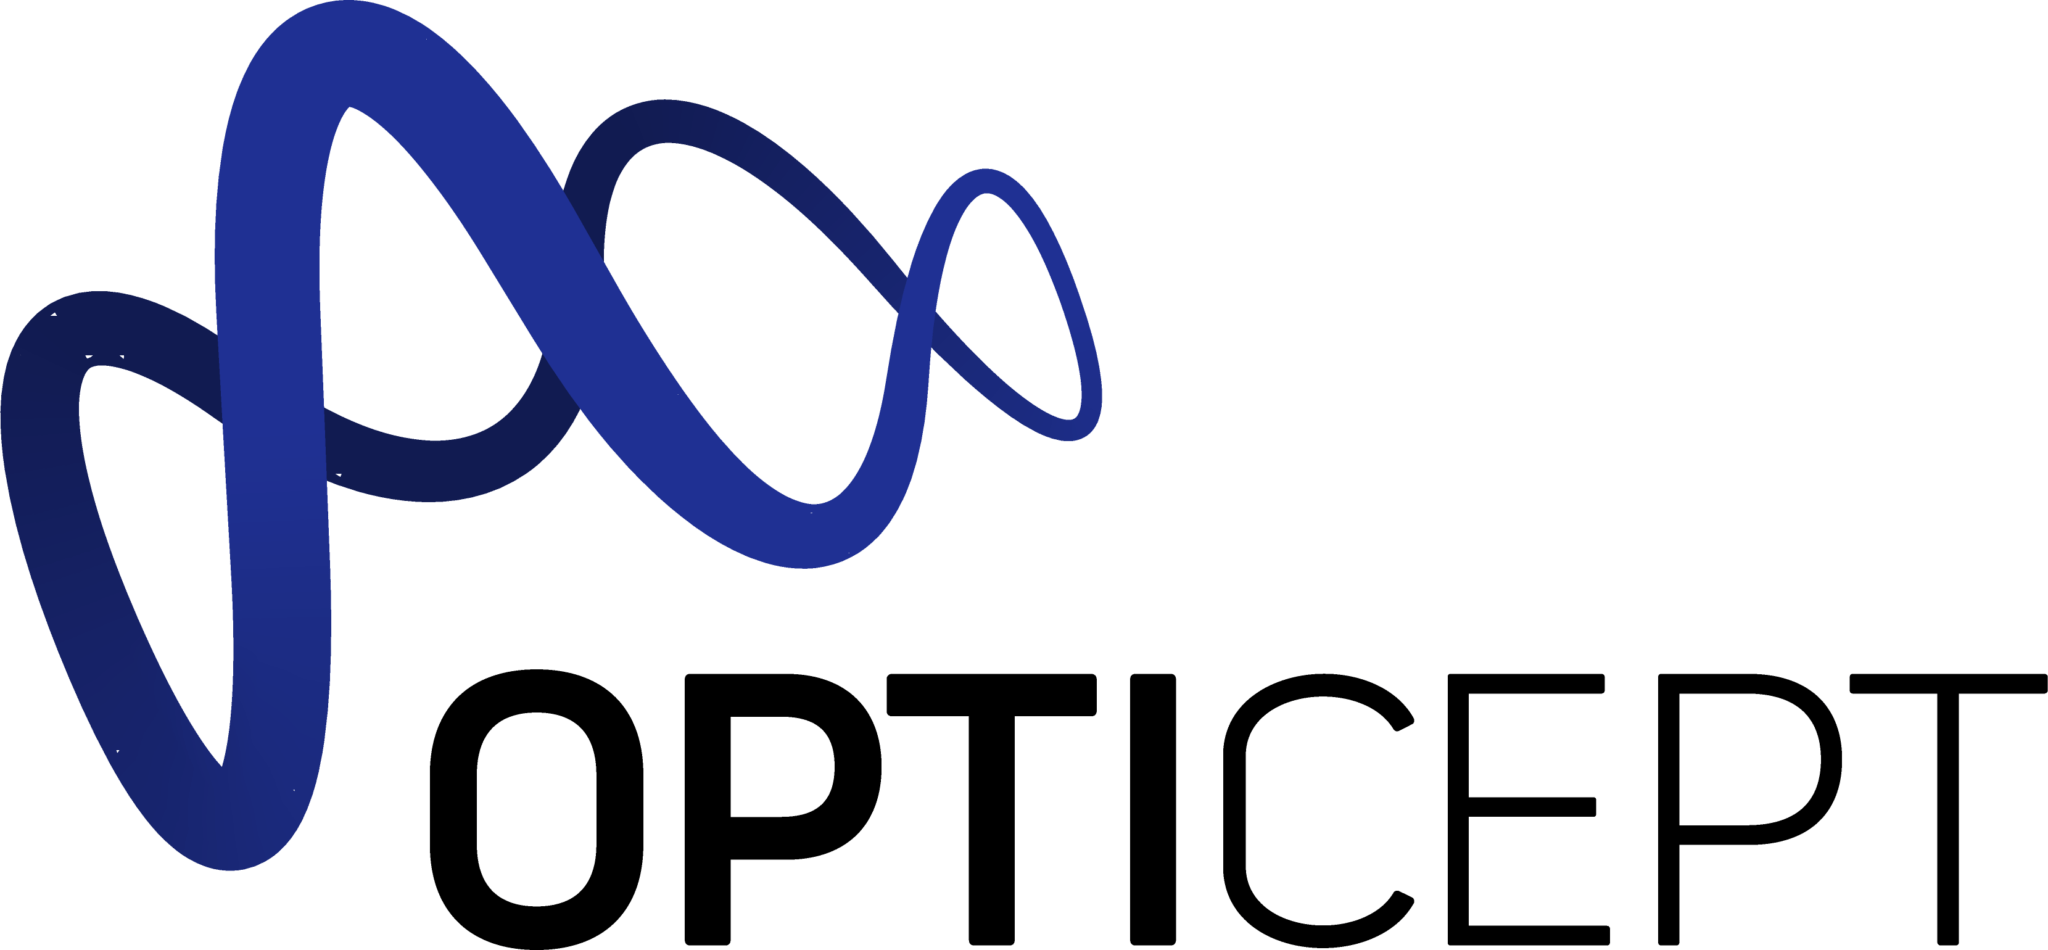 Opticept logo